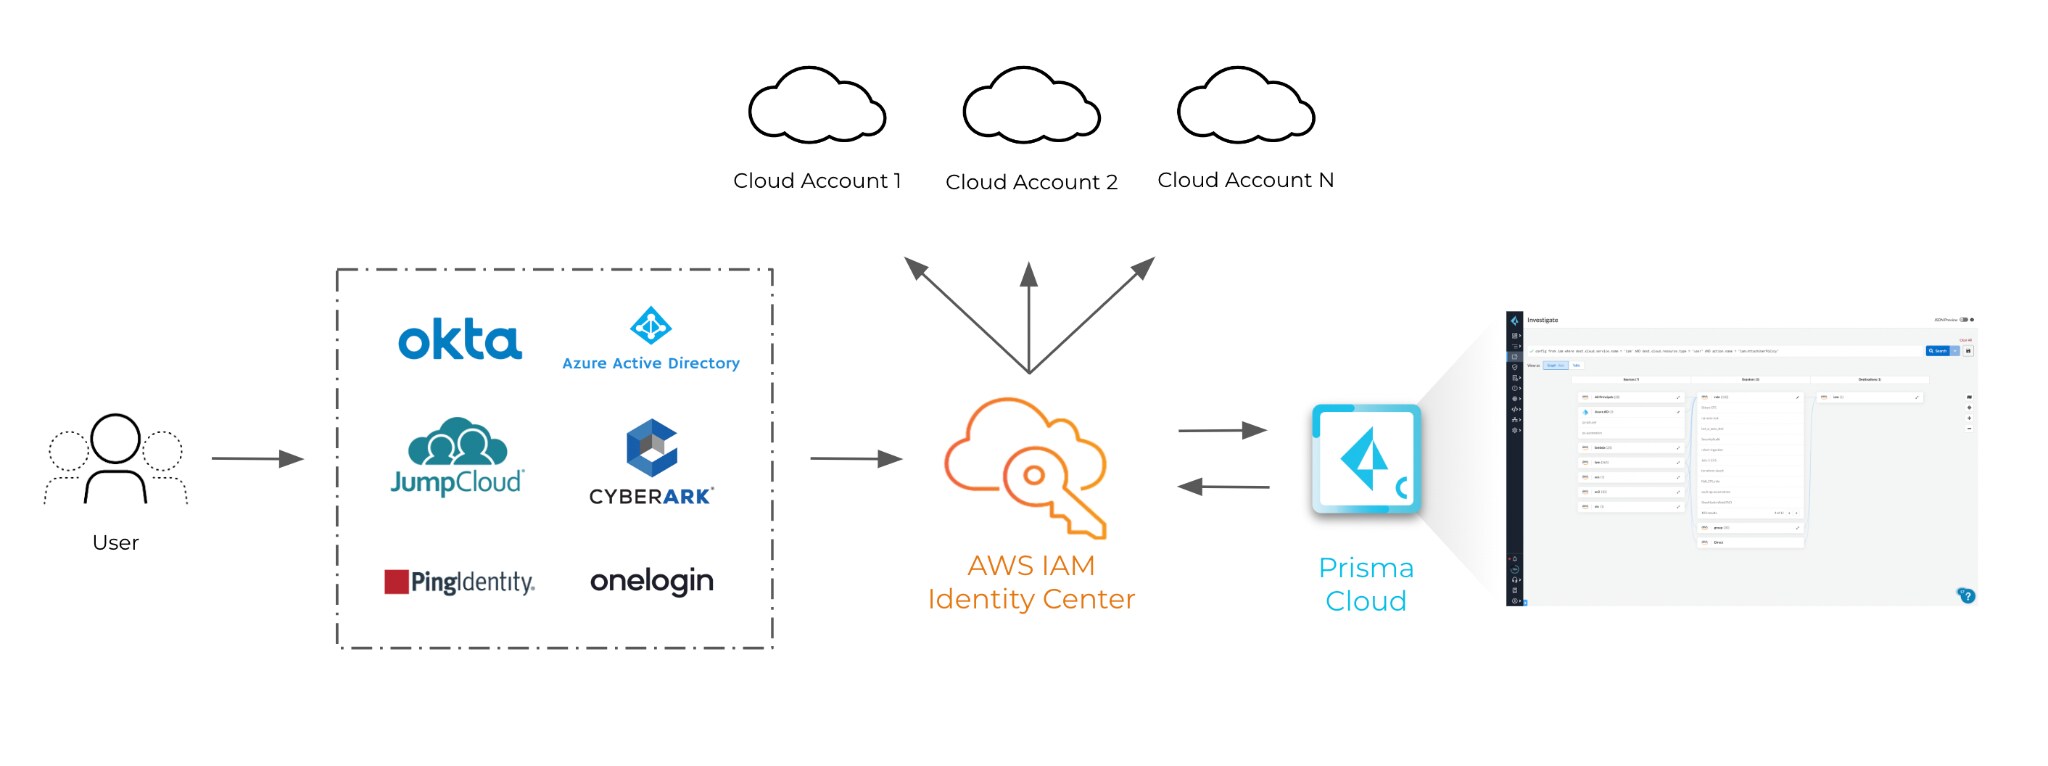 Prisma Cloud with AWS IAM Identity Center.